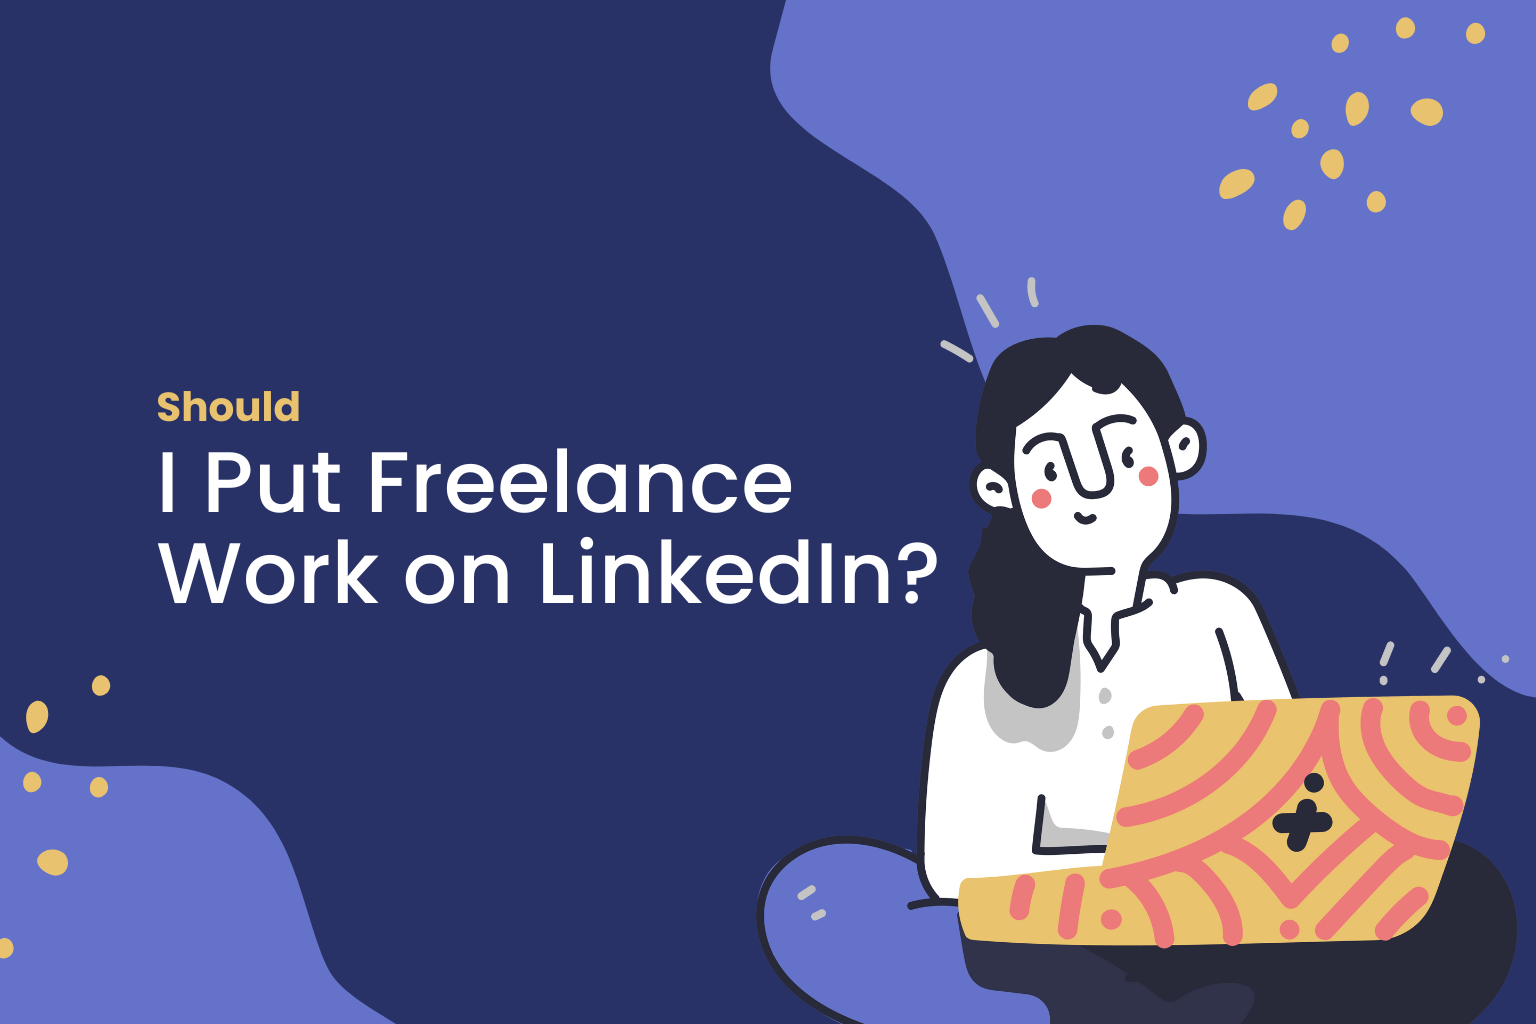 Should I Put Freelance Work on LinkedIn?